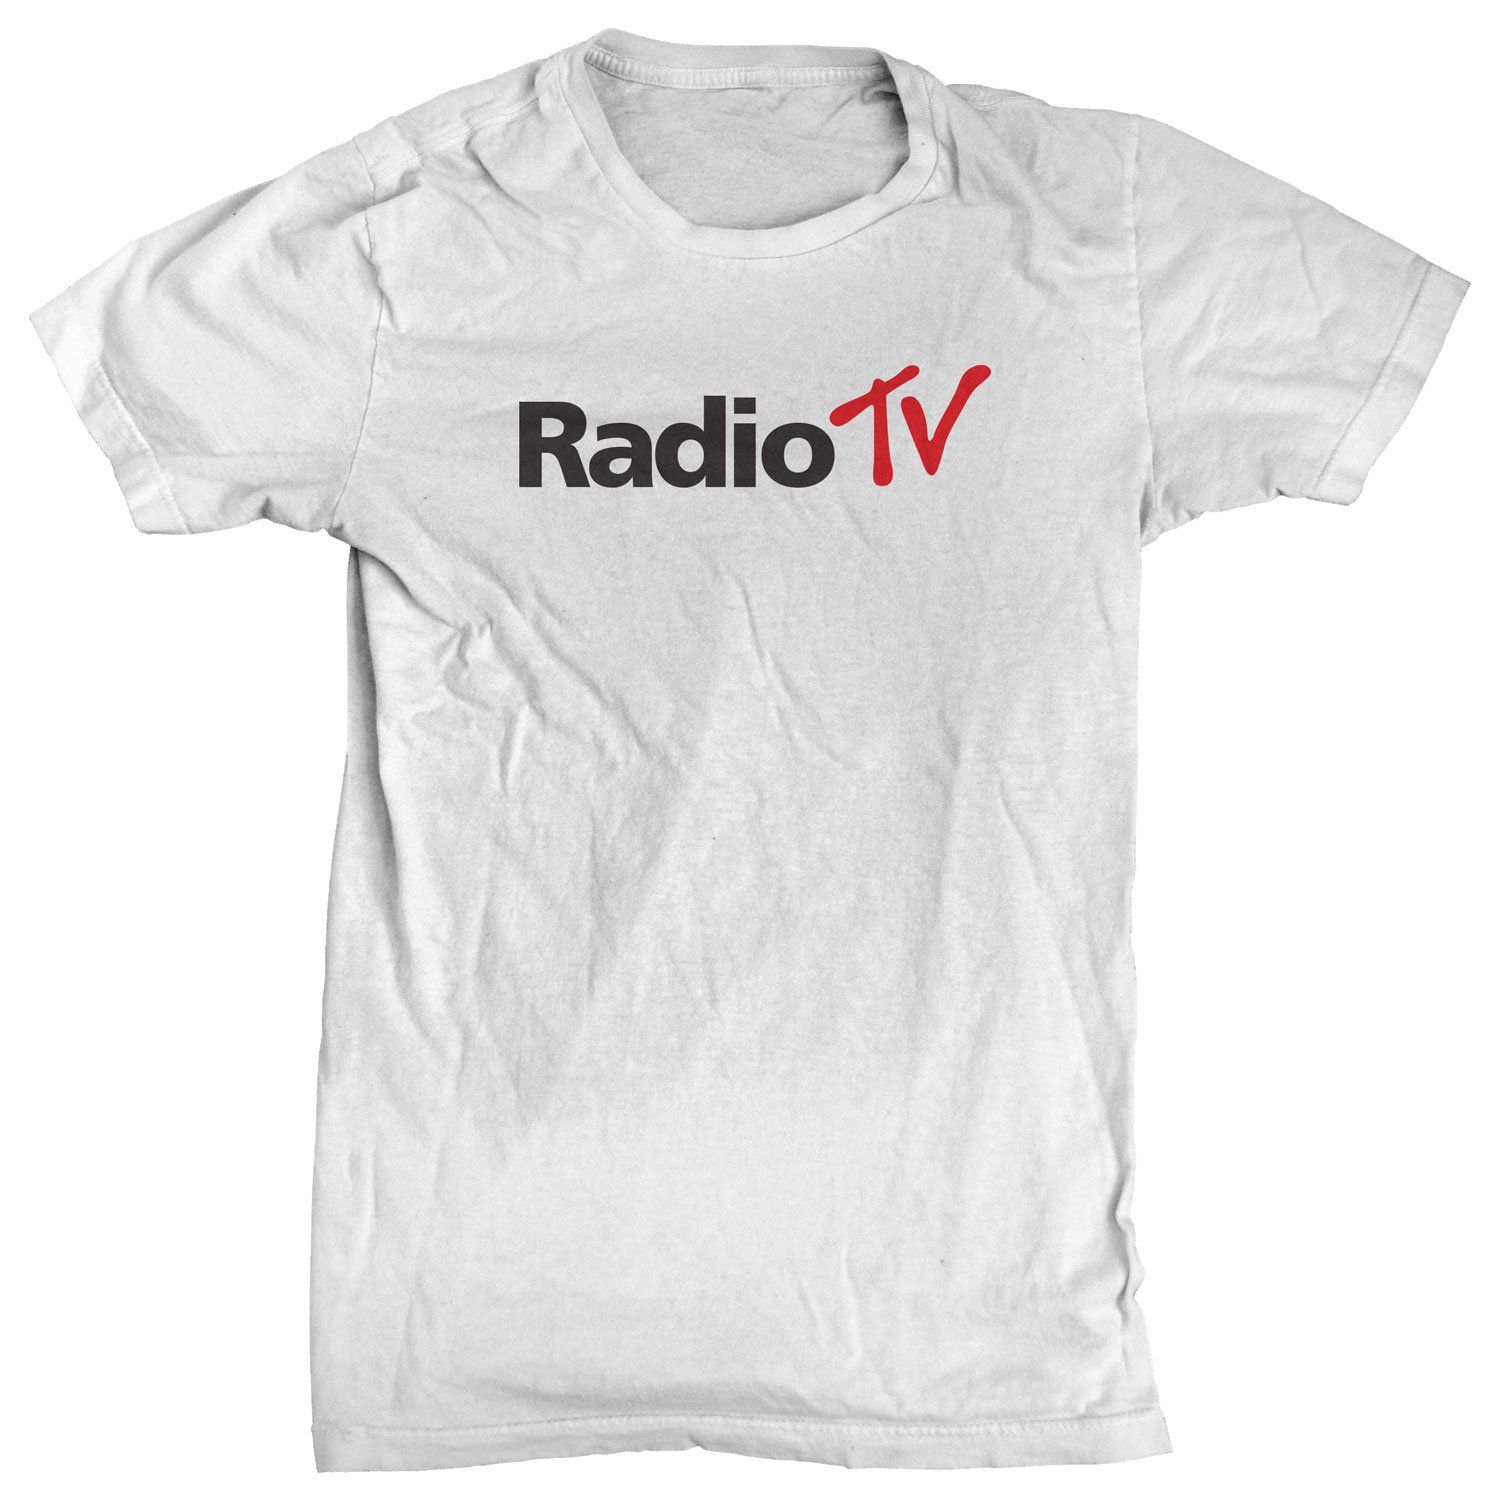 Oh snap, a white RadioTV shirt.